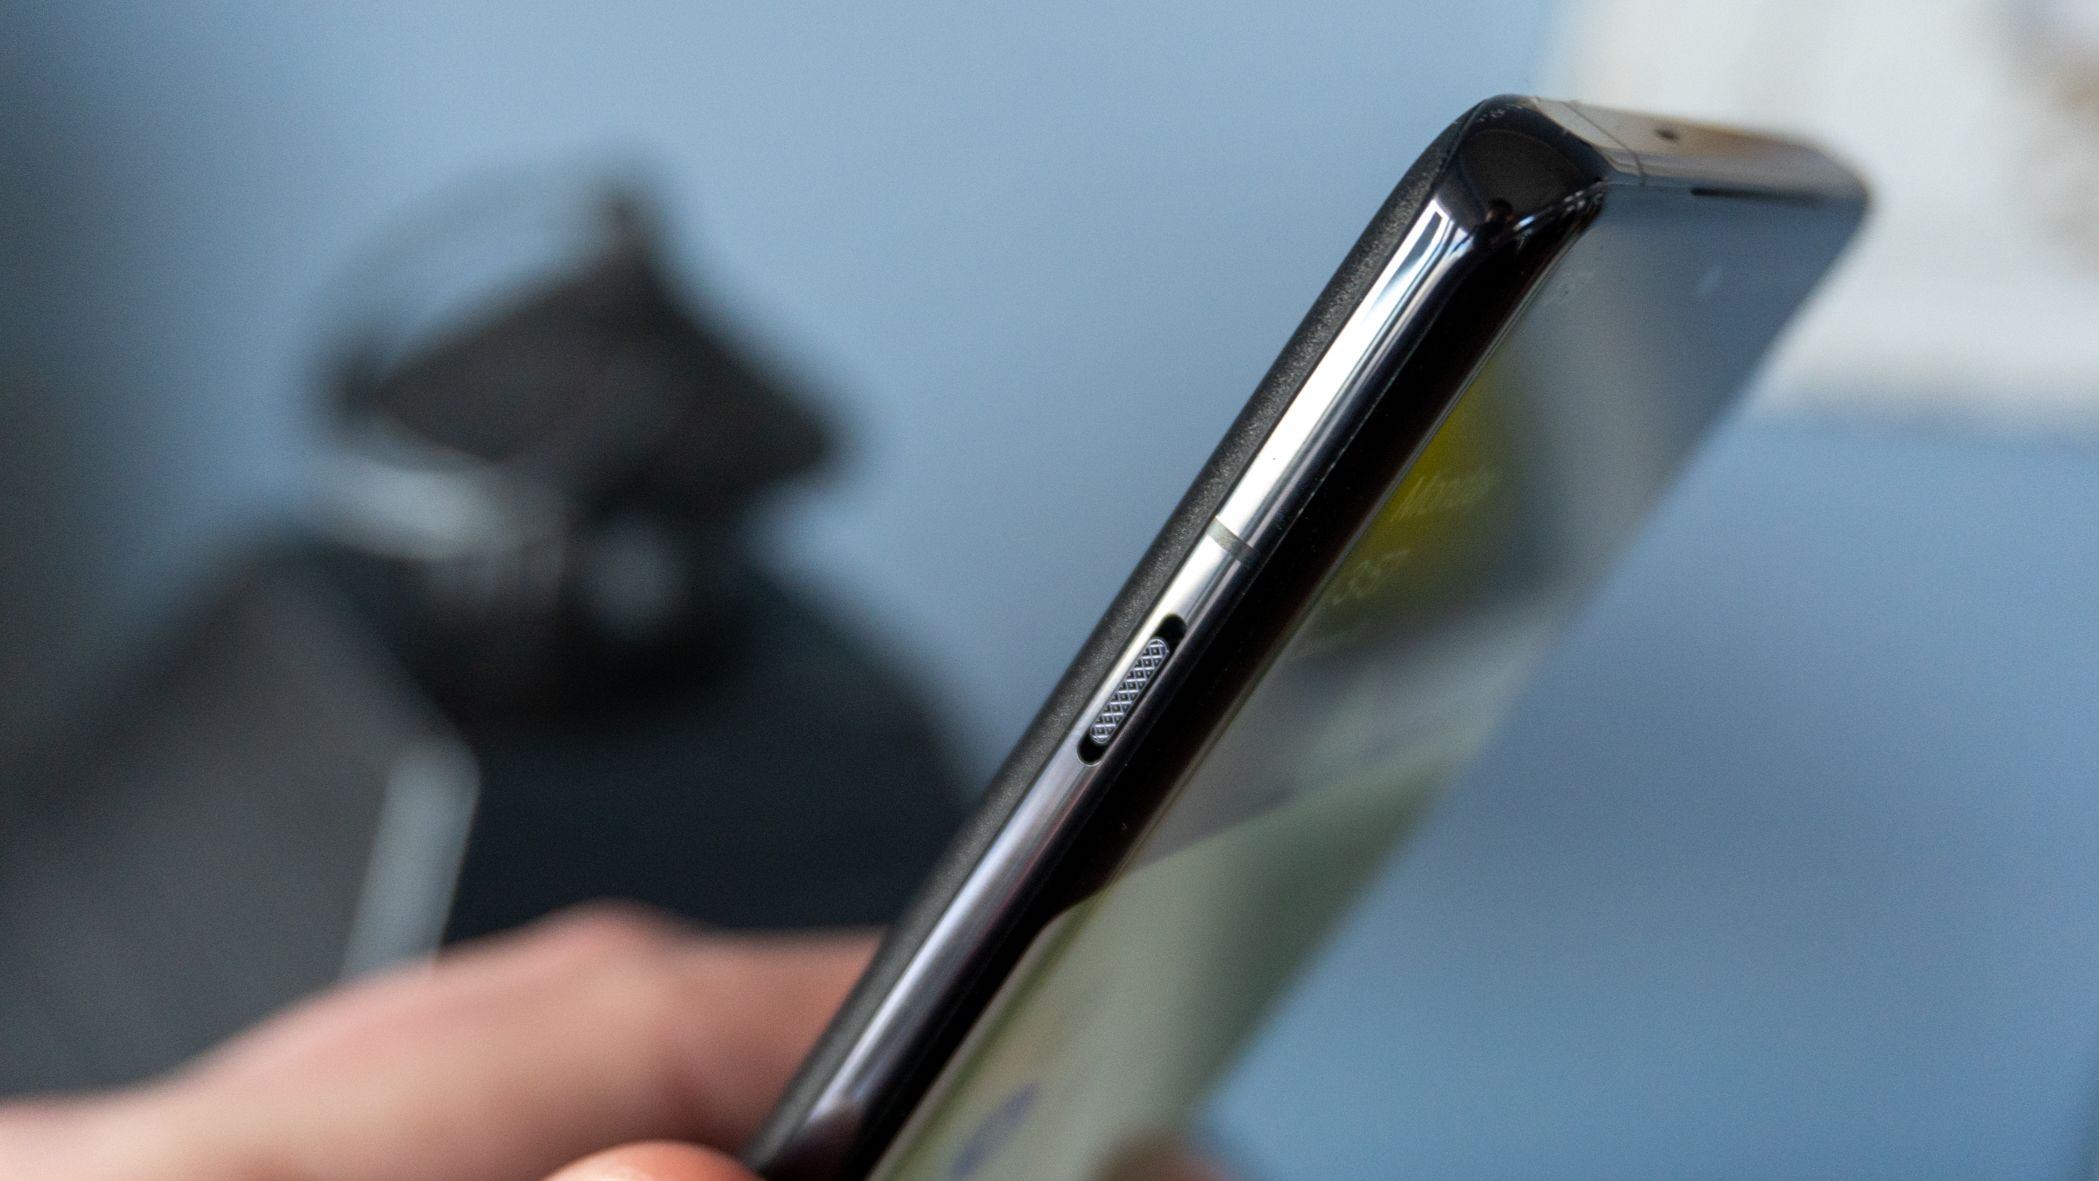 First Impression: OnePlus 12 Phone